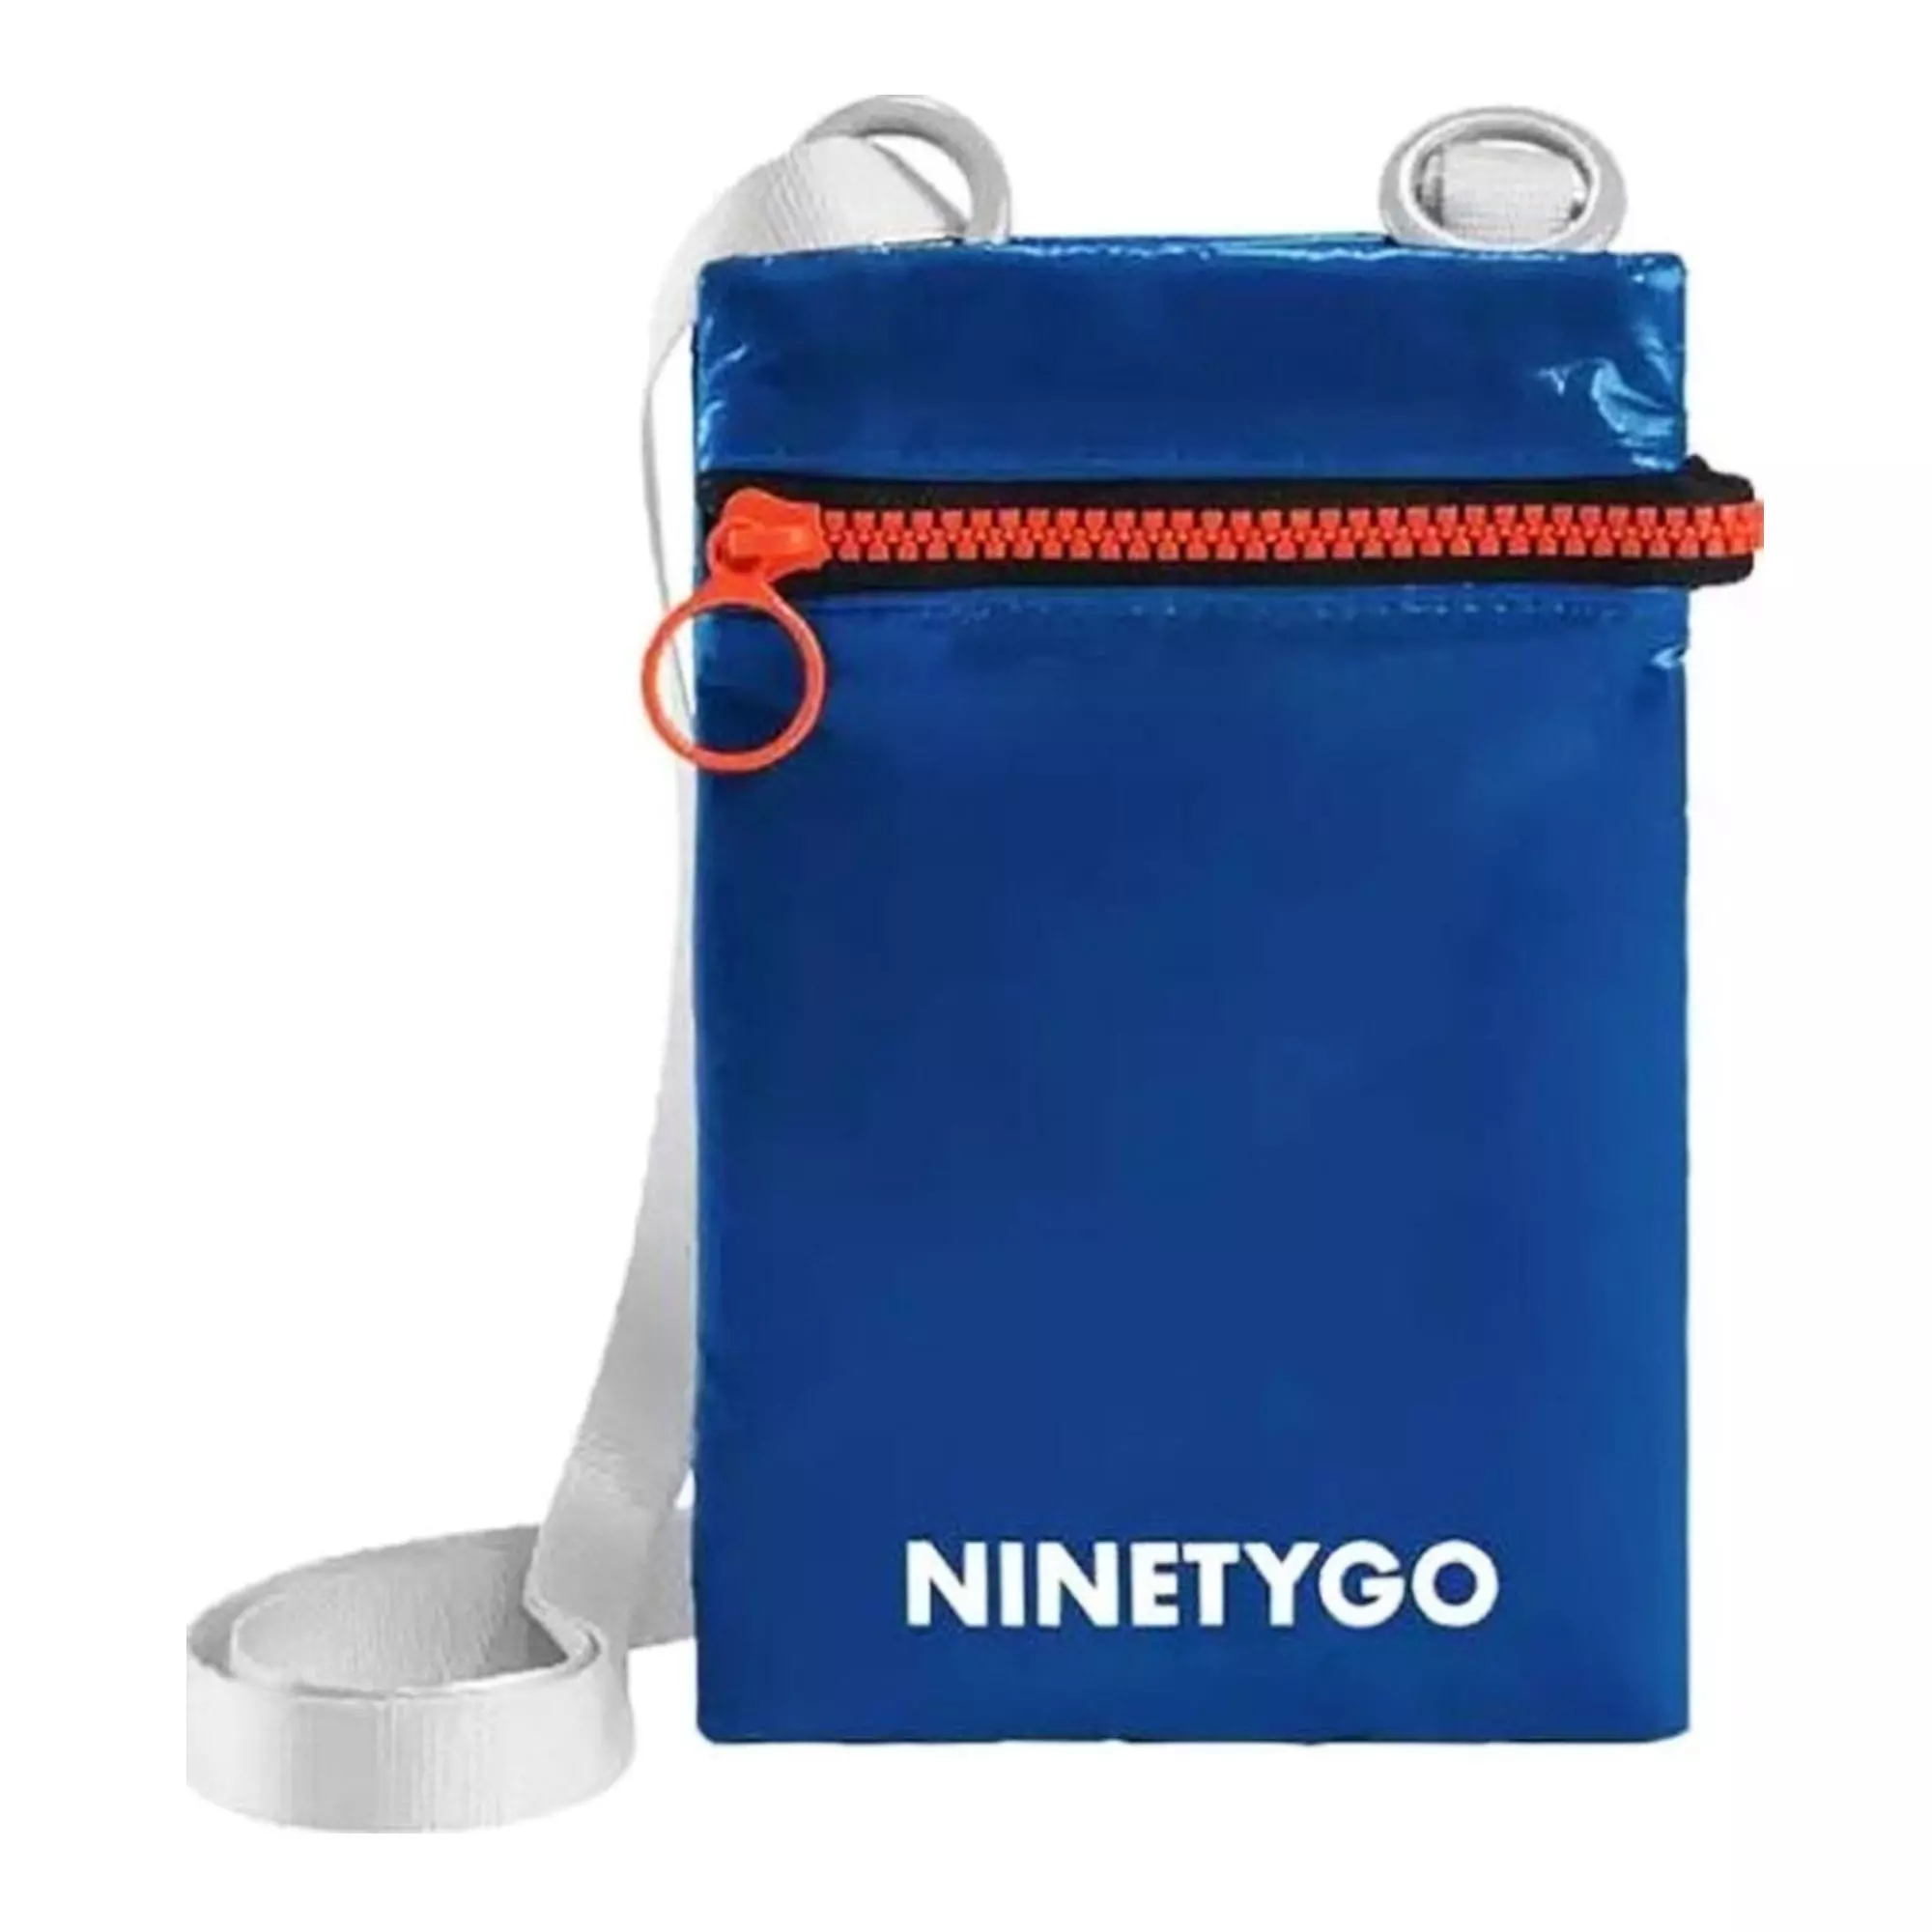 Сумка 90FUN NINETYGO Double-sided Mini Crossbody Bag Blue